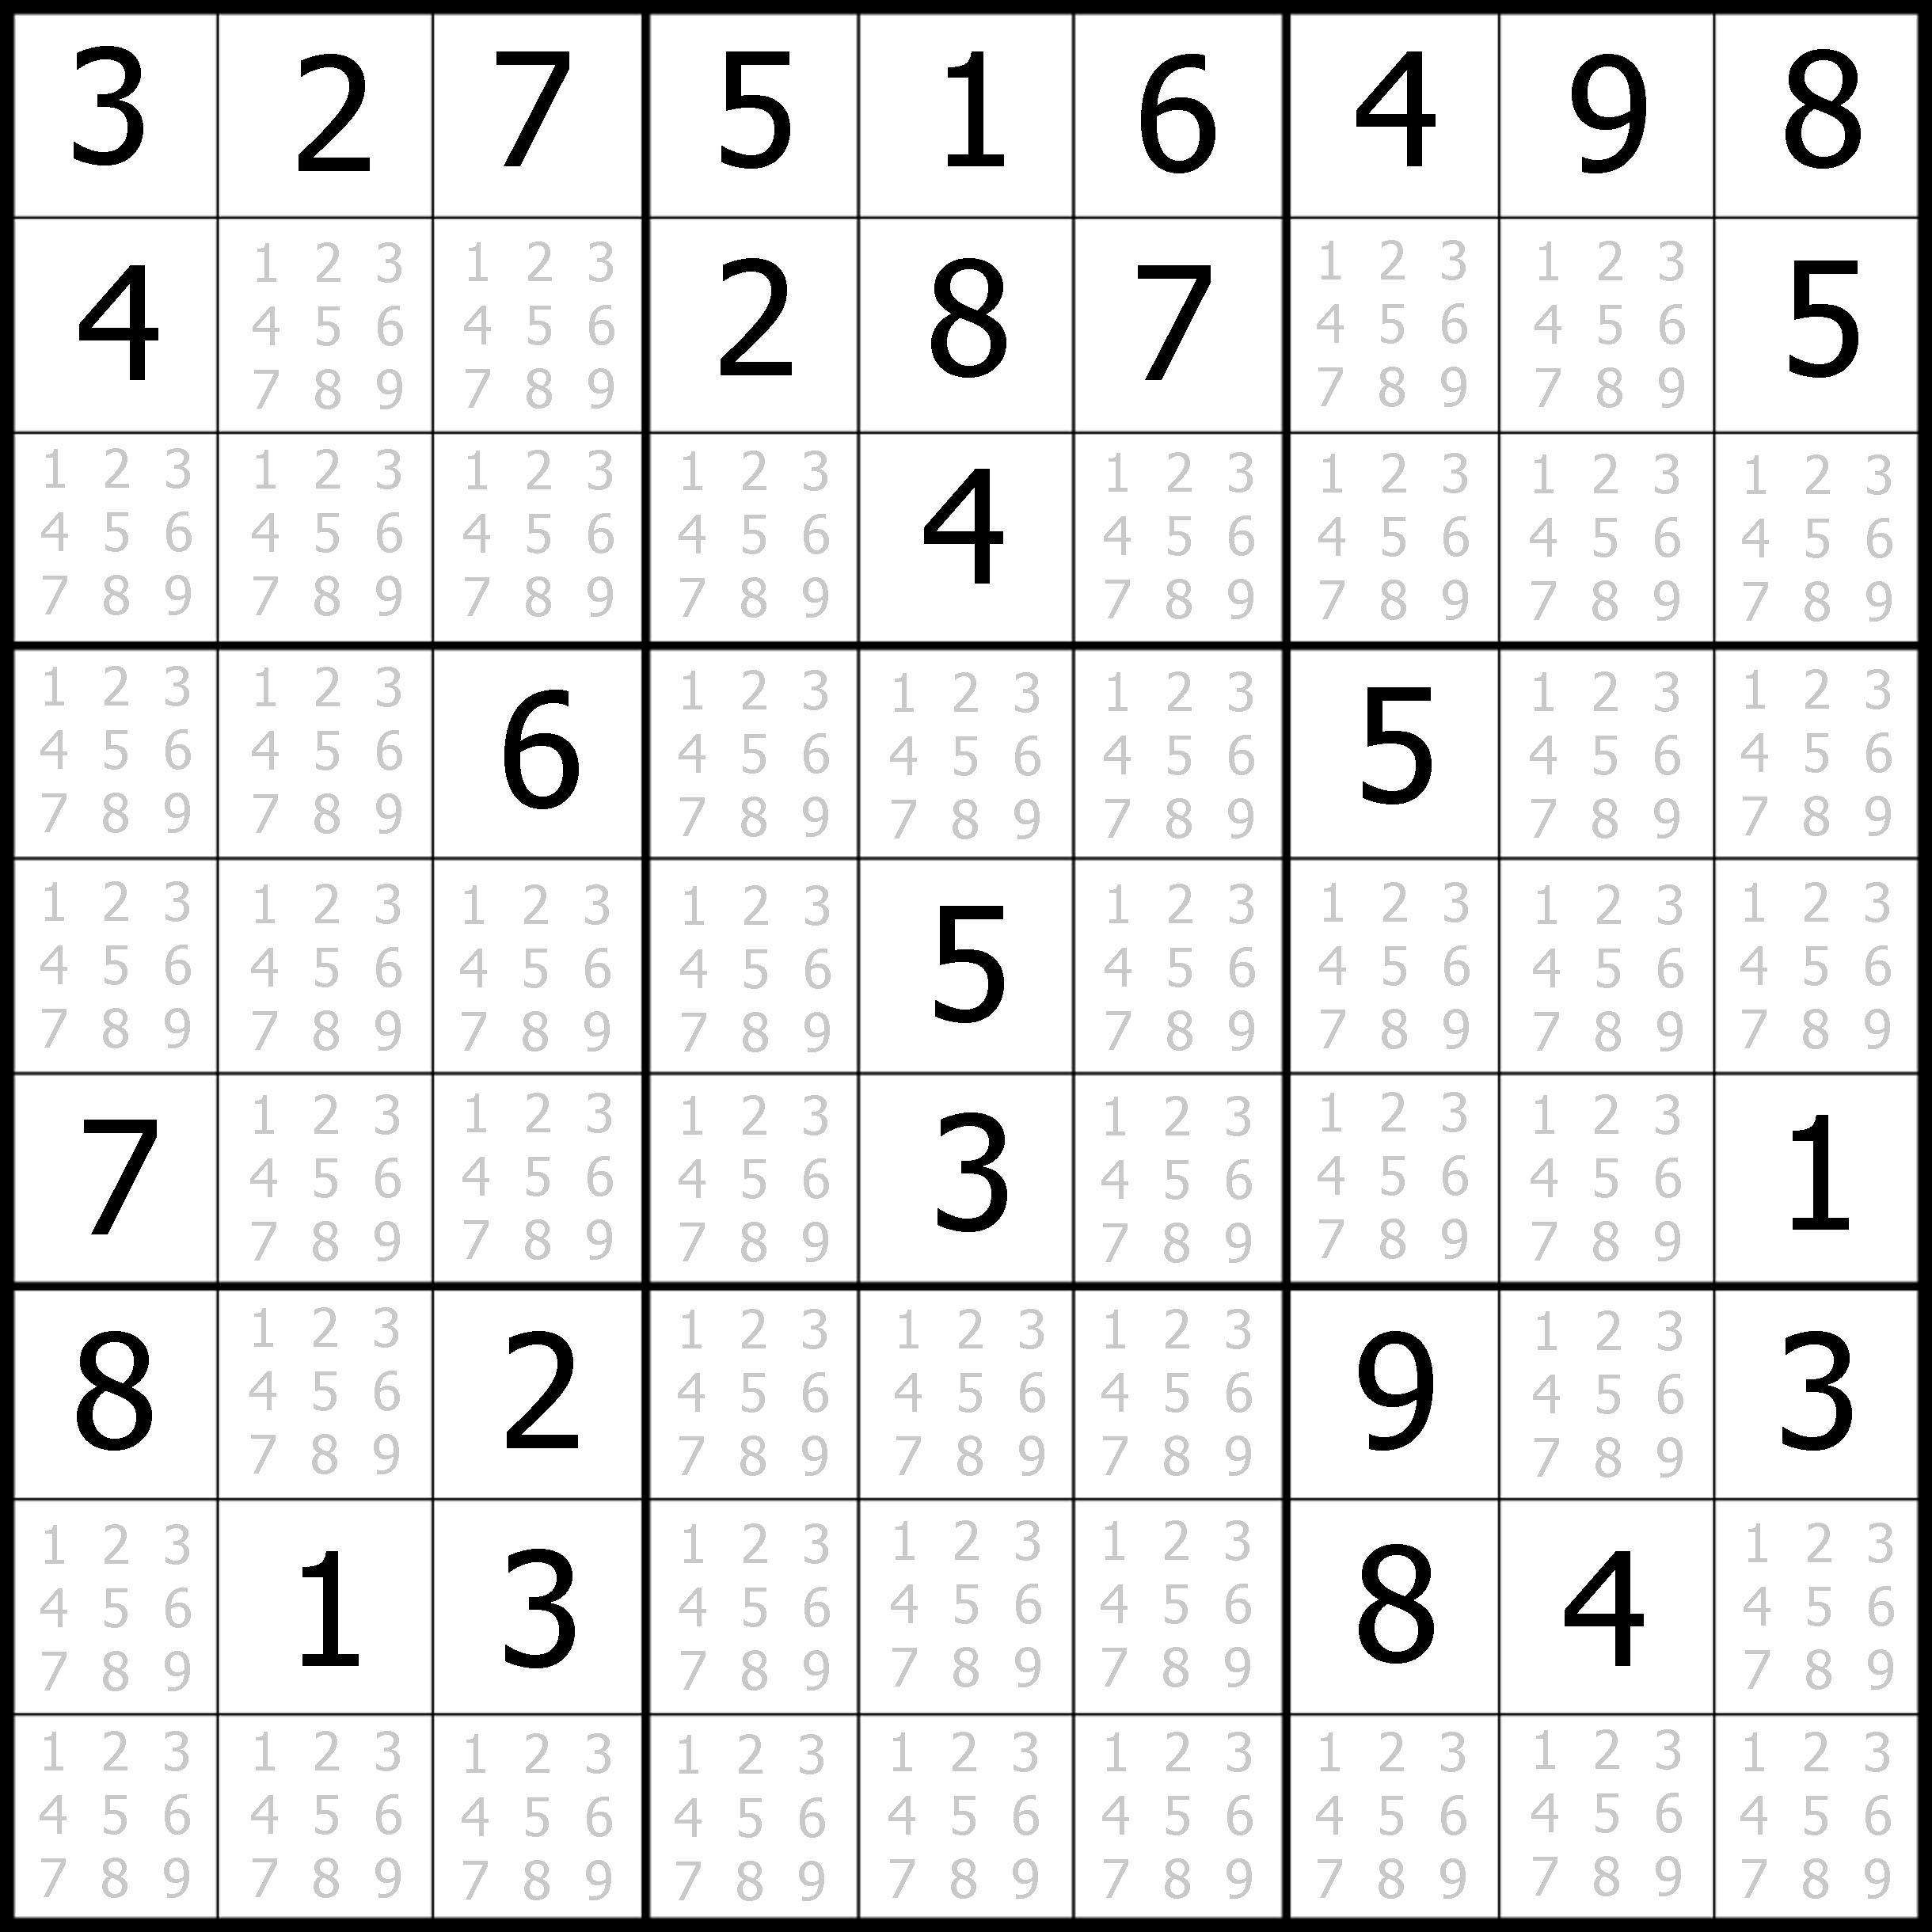 Free Online Sudoku Puzzles Printable